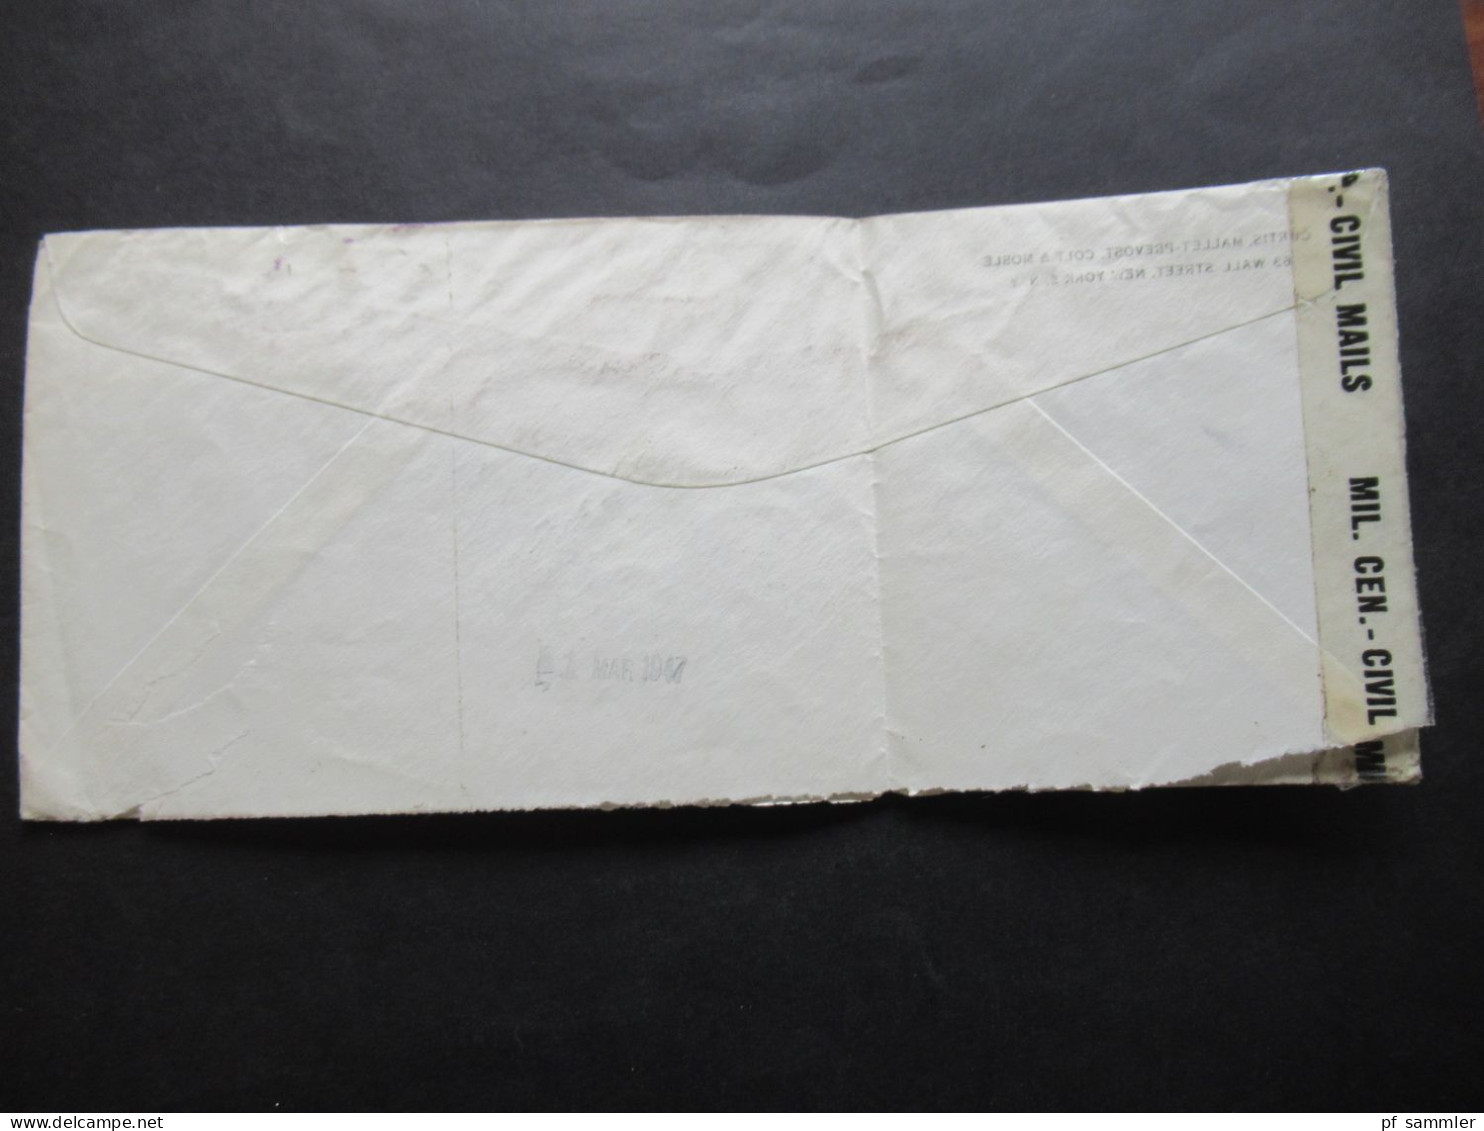 USA 1947 Zensurbeleg / Verschlussstreifen Opened By Civil Mails / Censorship Passed 20766 Germany NY - FFM Air Mail - Cartas & Documentos